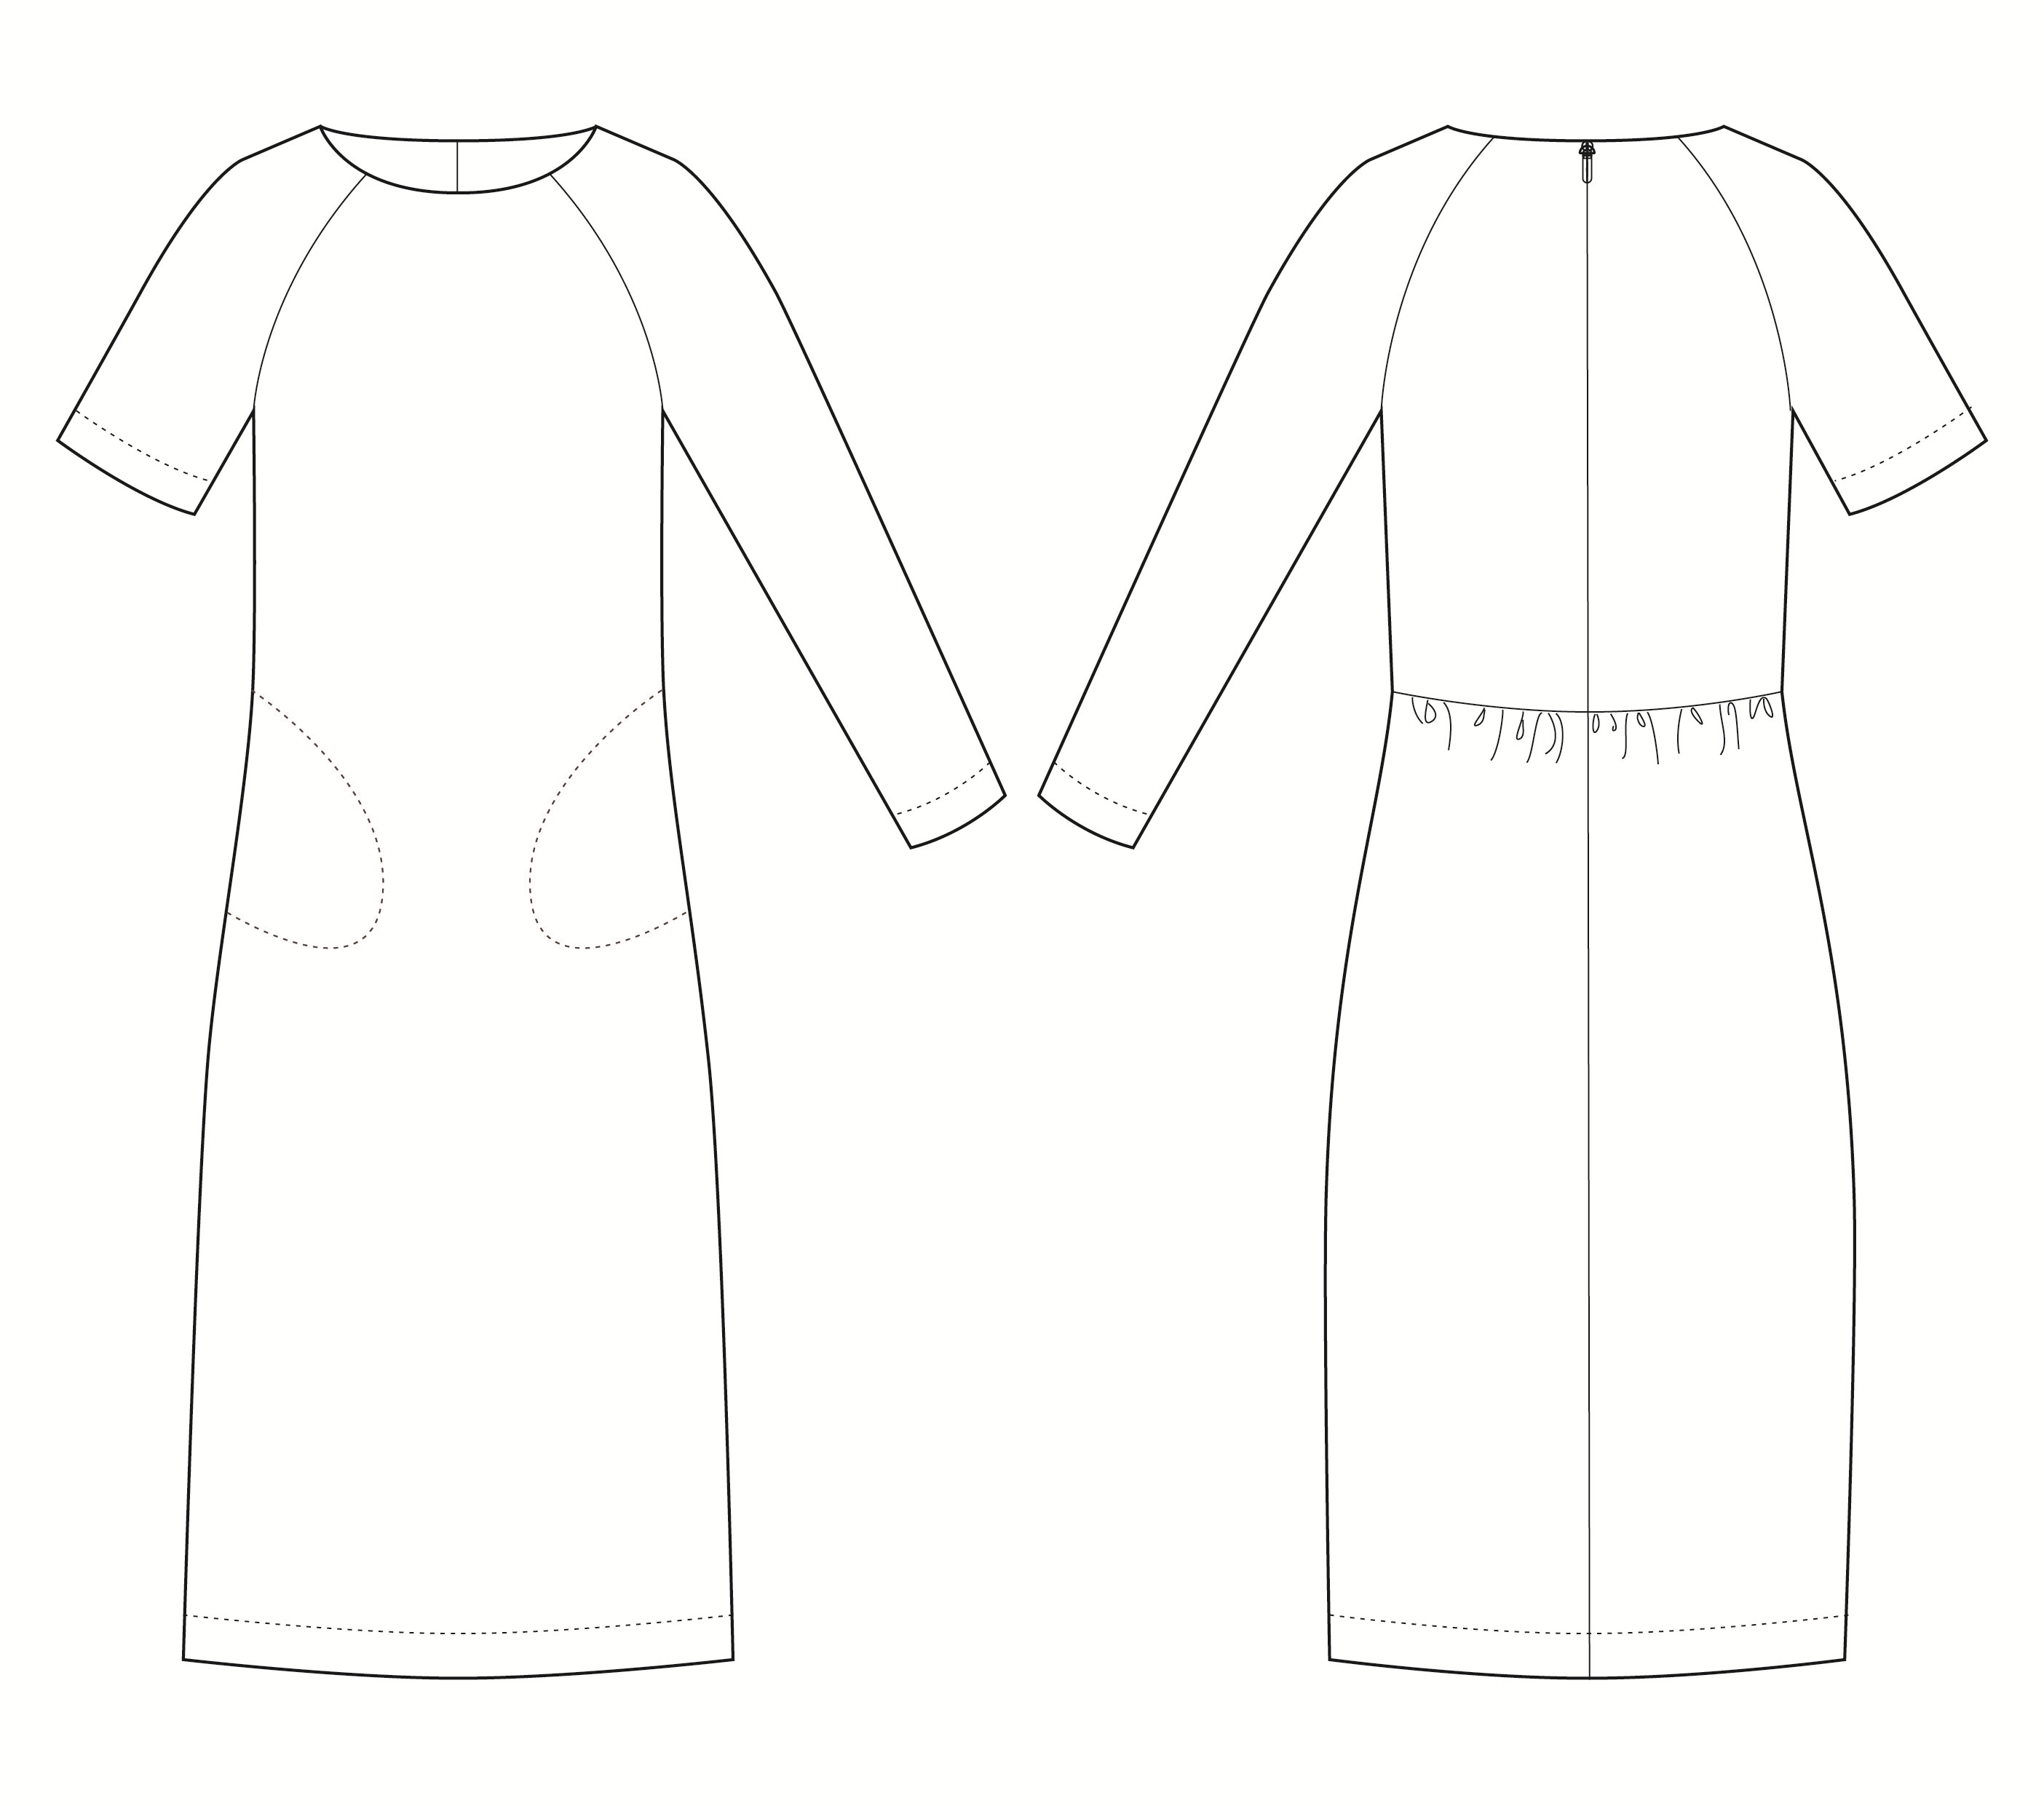 The Avid Seamstress THE GATHERED DRESS Sewing Pattern